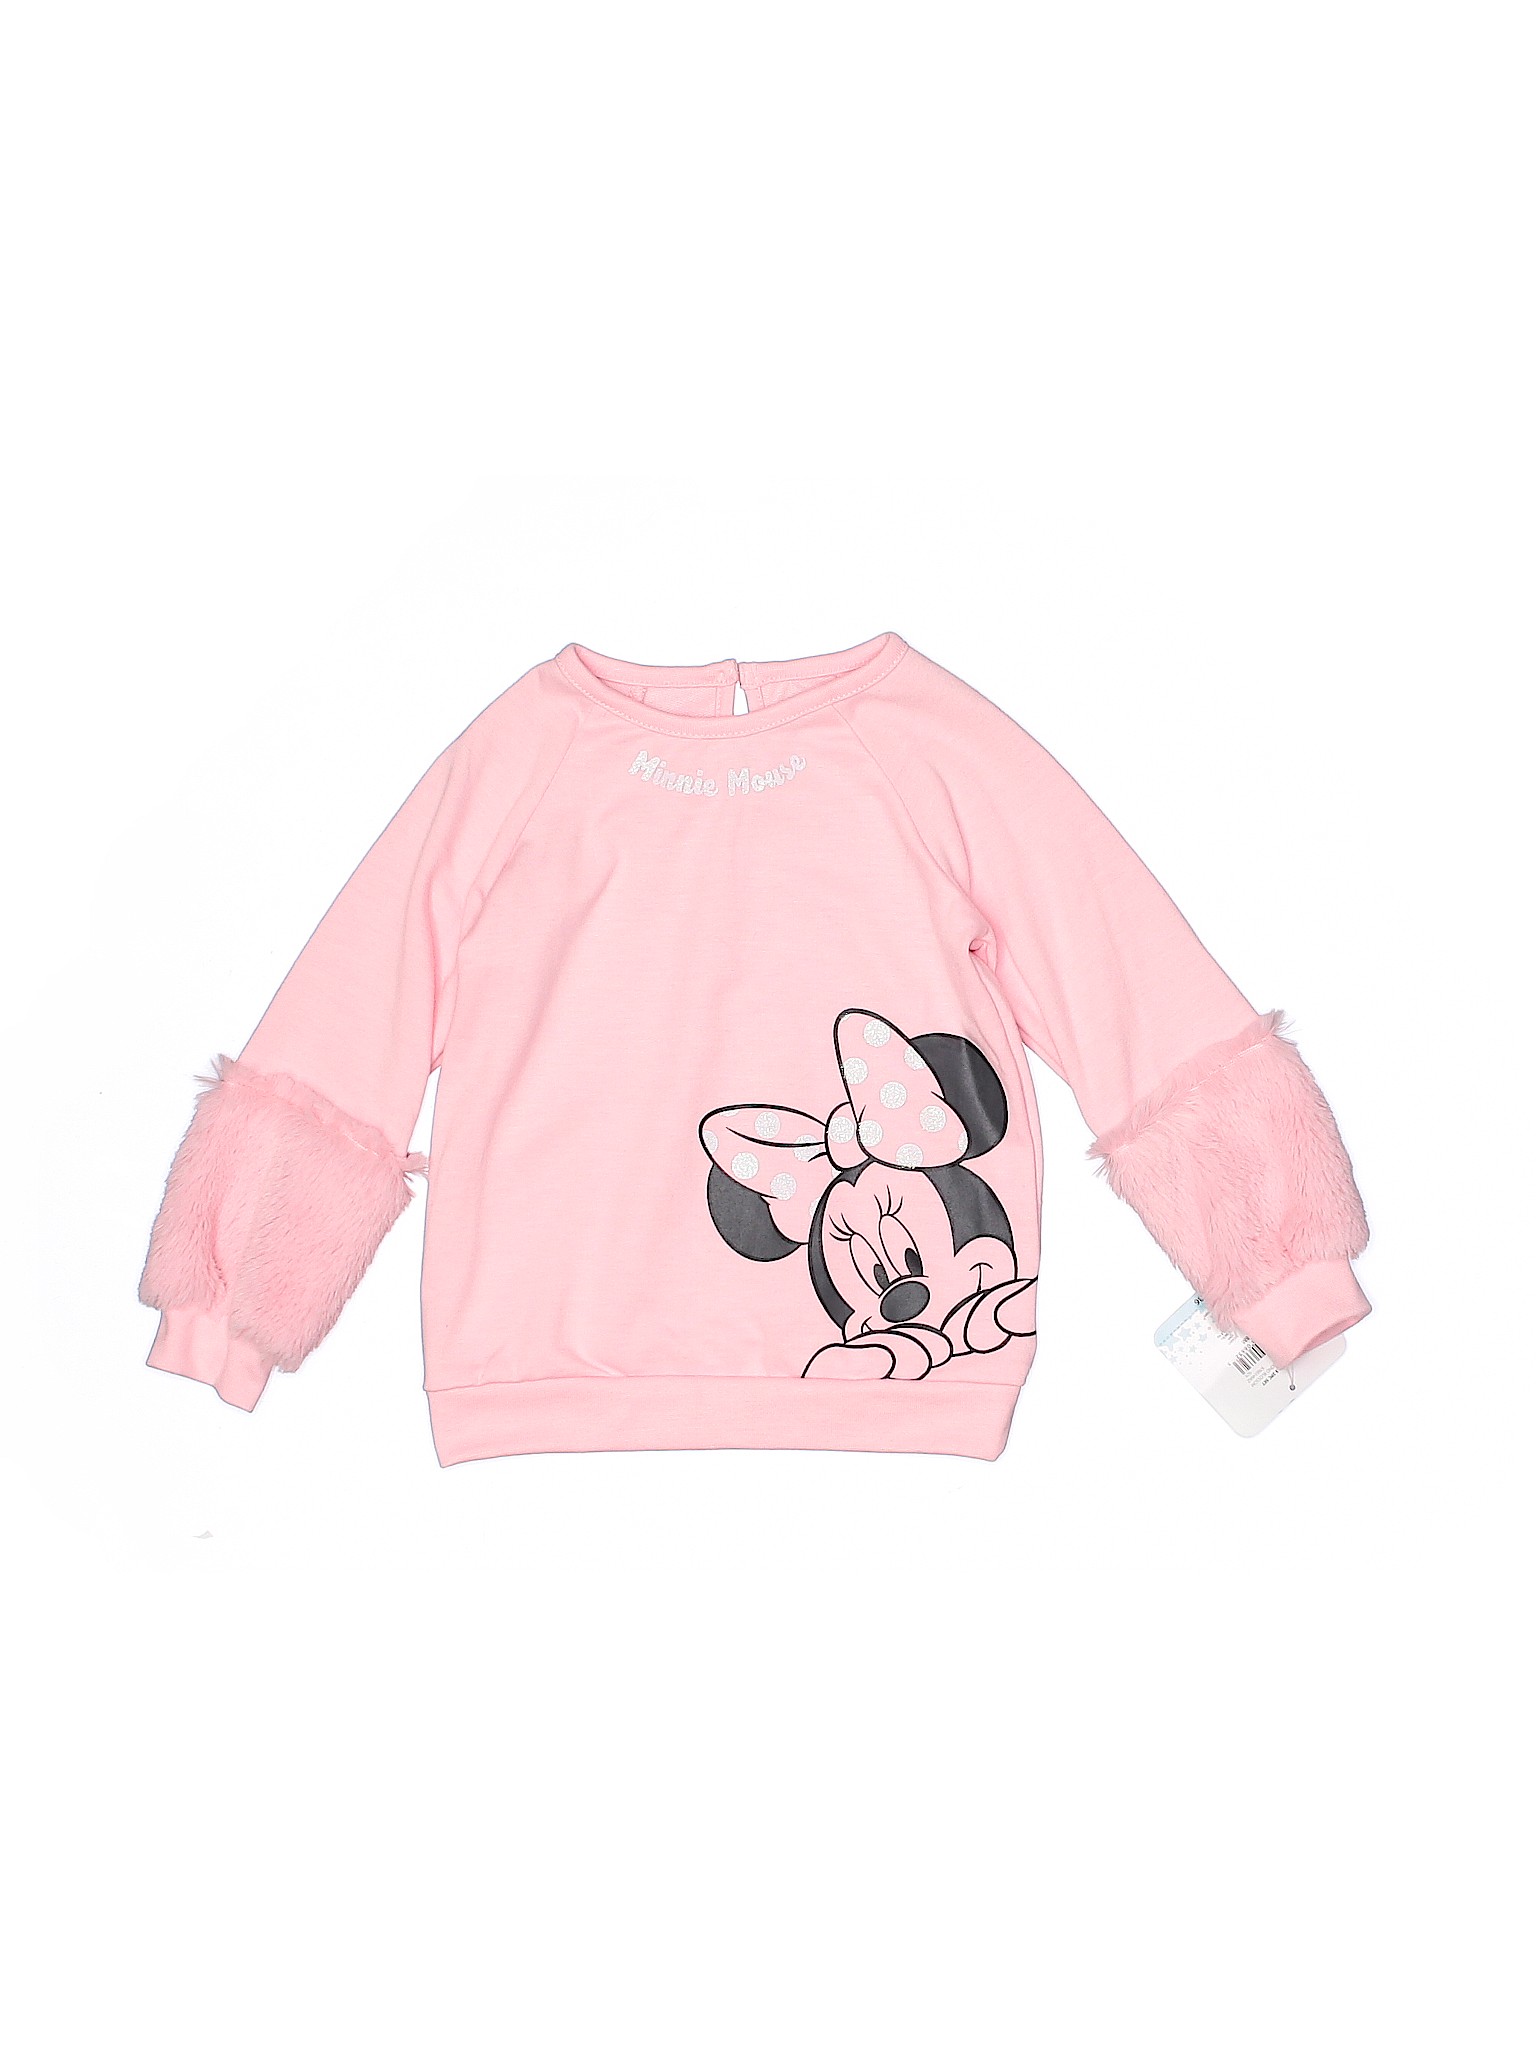 NWT Disney Girls Pink Long Sleeve T-Shirt 18 Months | eBay